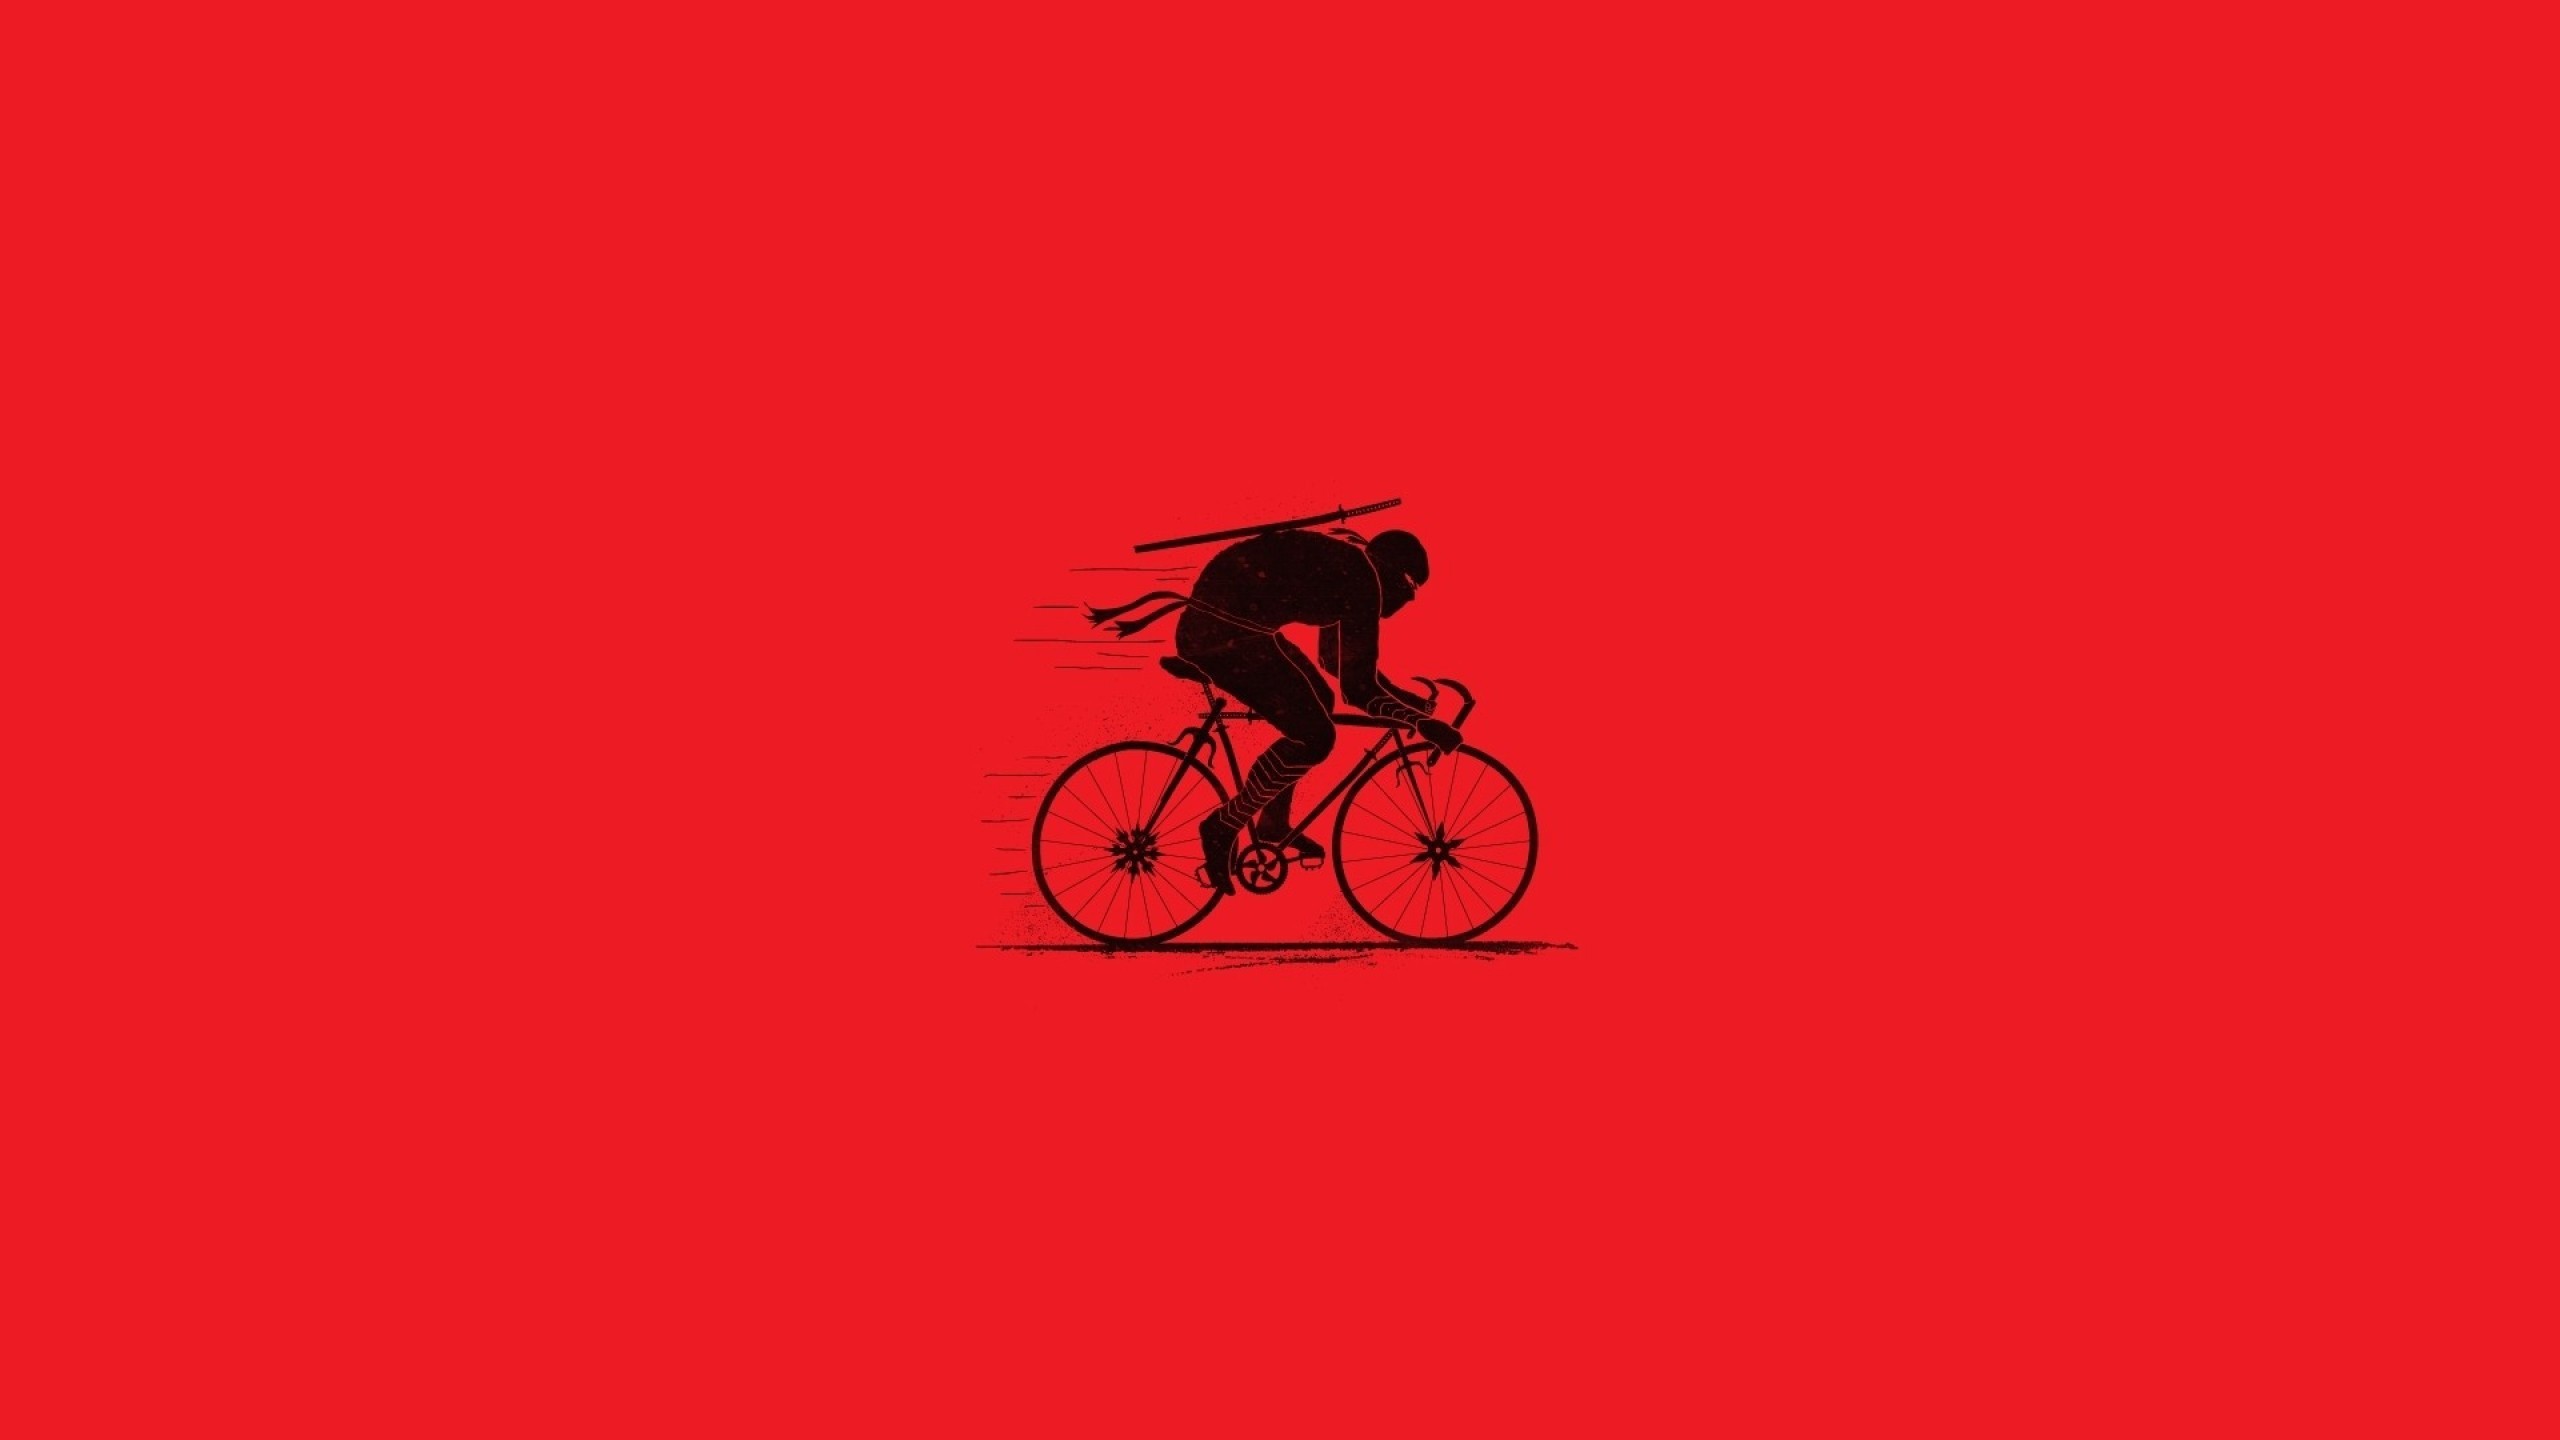 Ninja rider on bike high definition